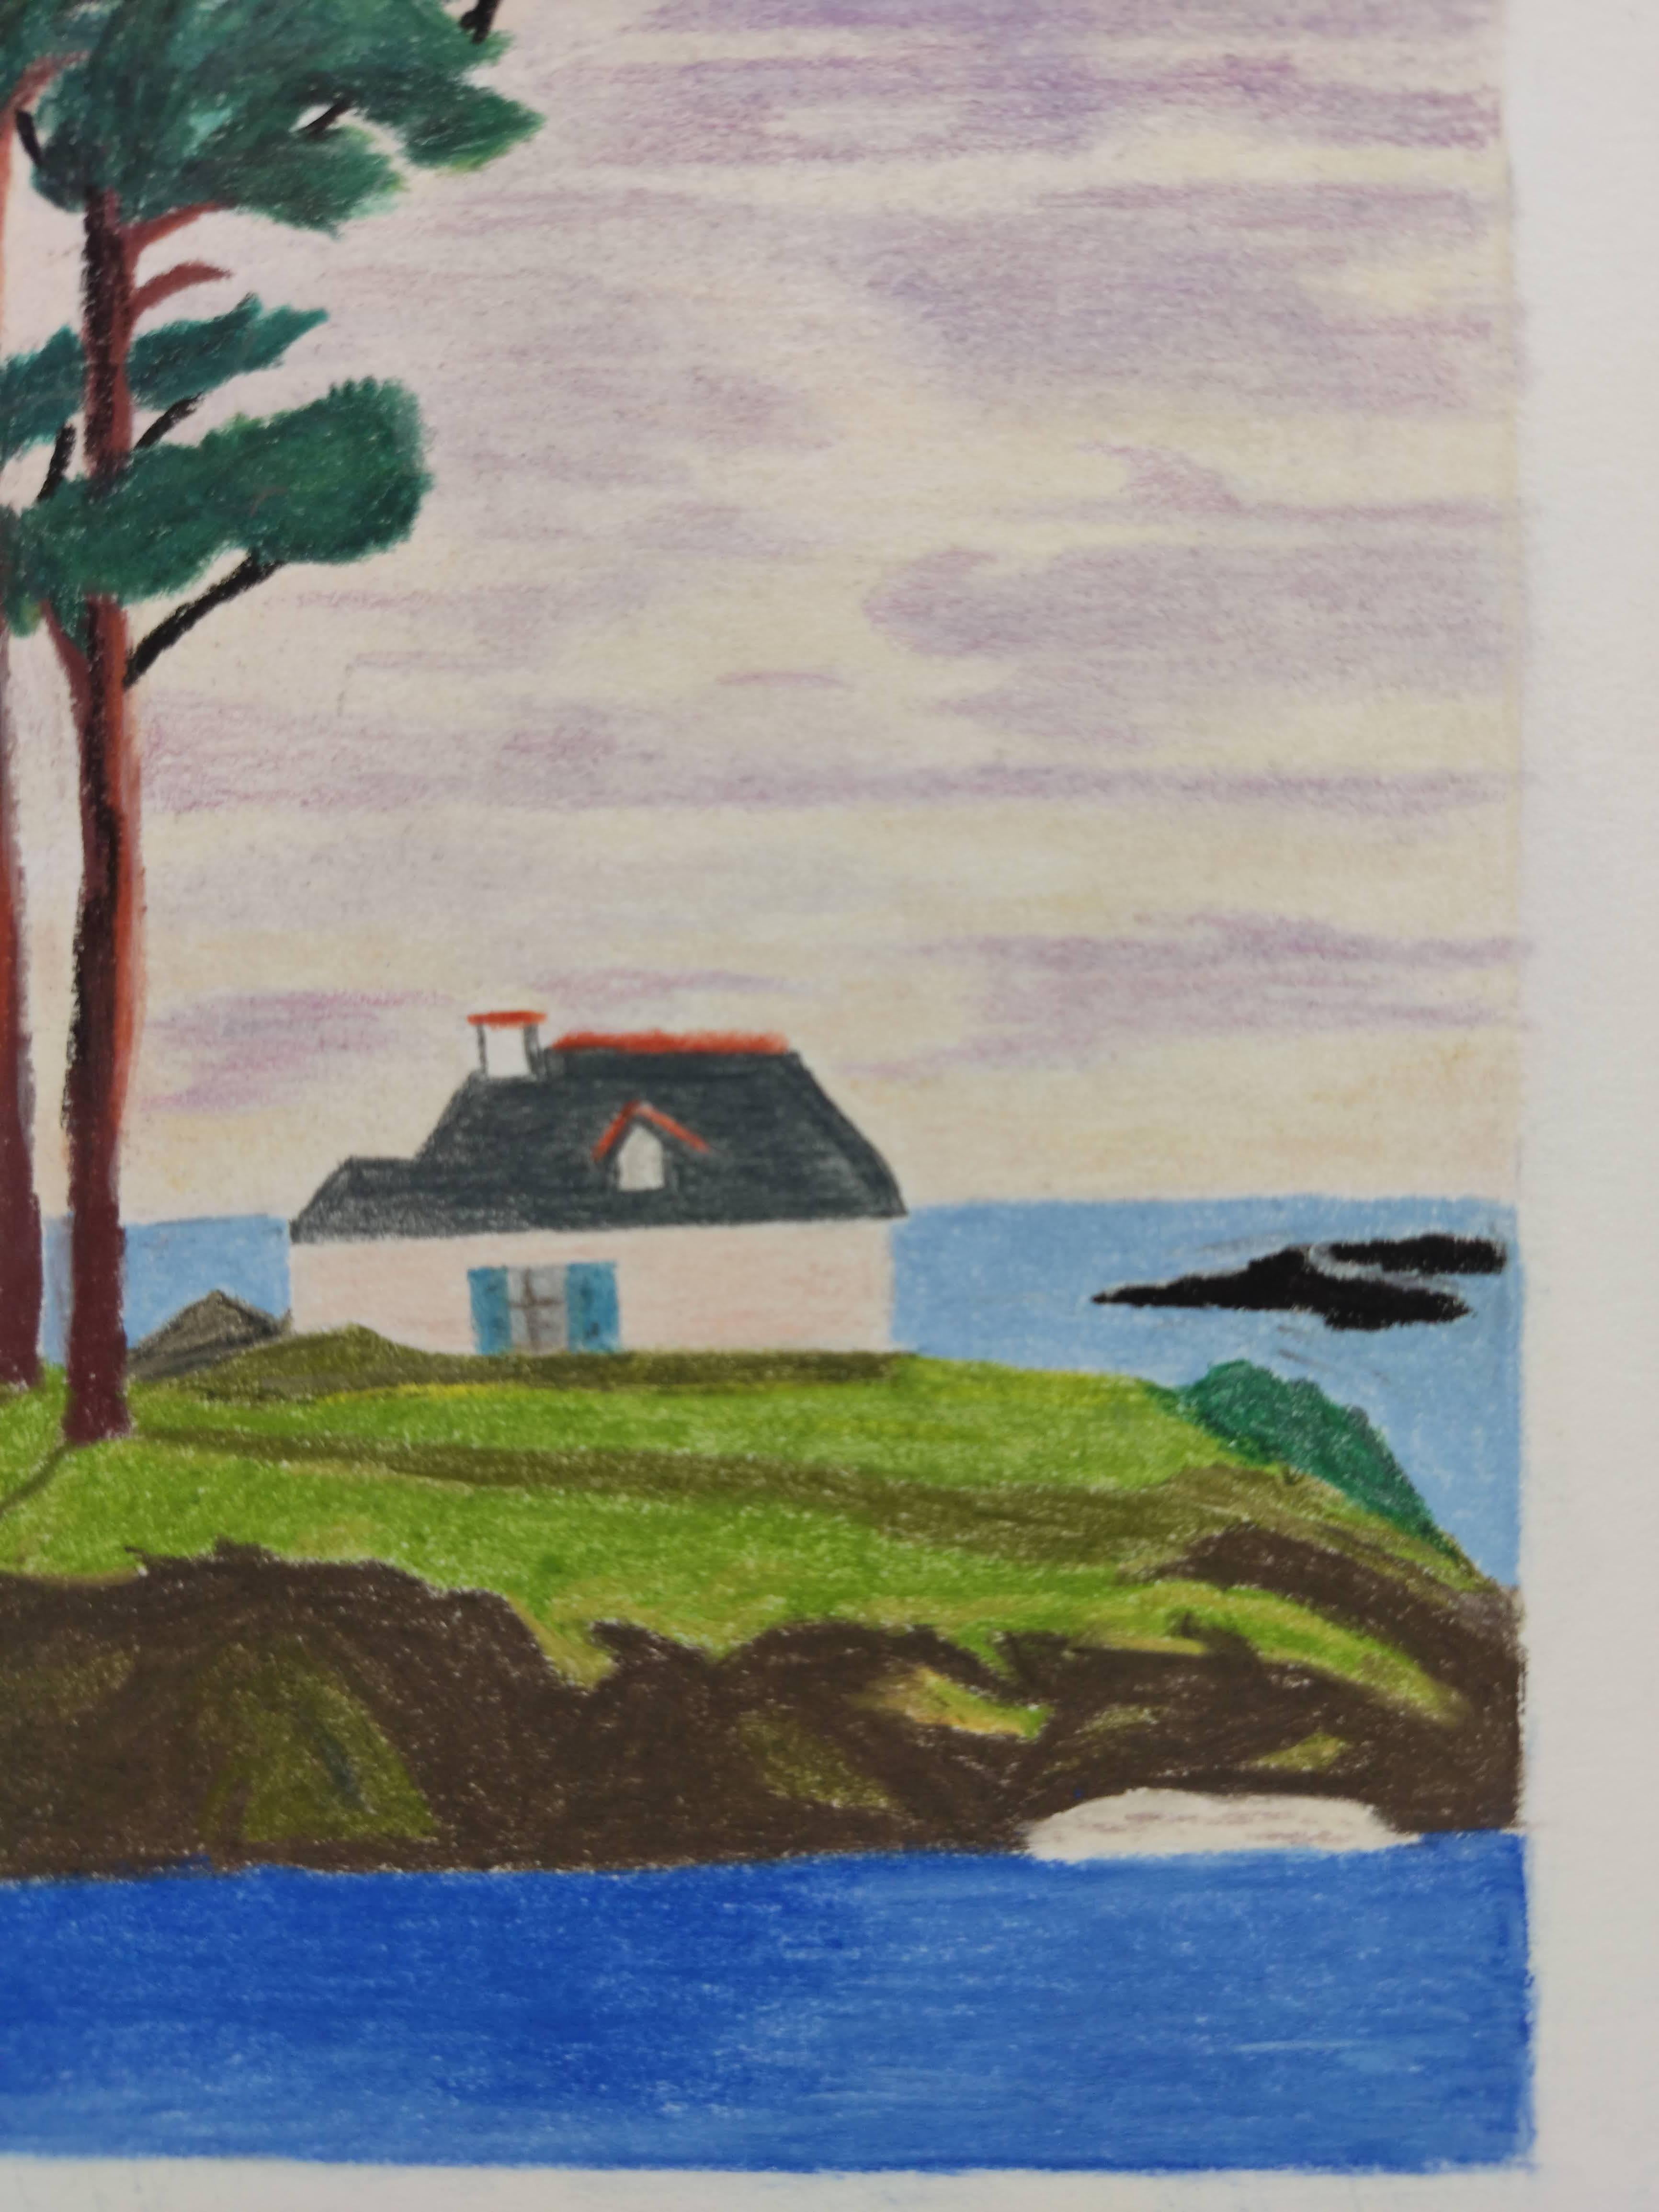 Au Bord de l'eau, Original Drawing, Pastel, Trees and House along the seafront - Gray Figurative Art by Gabriel Riesnert